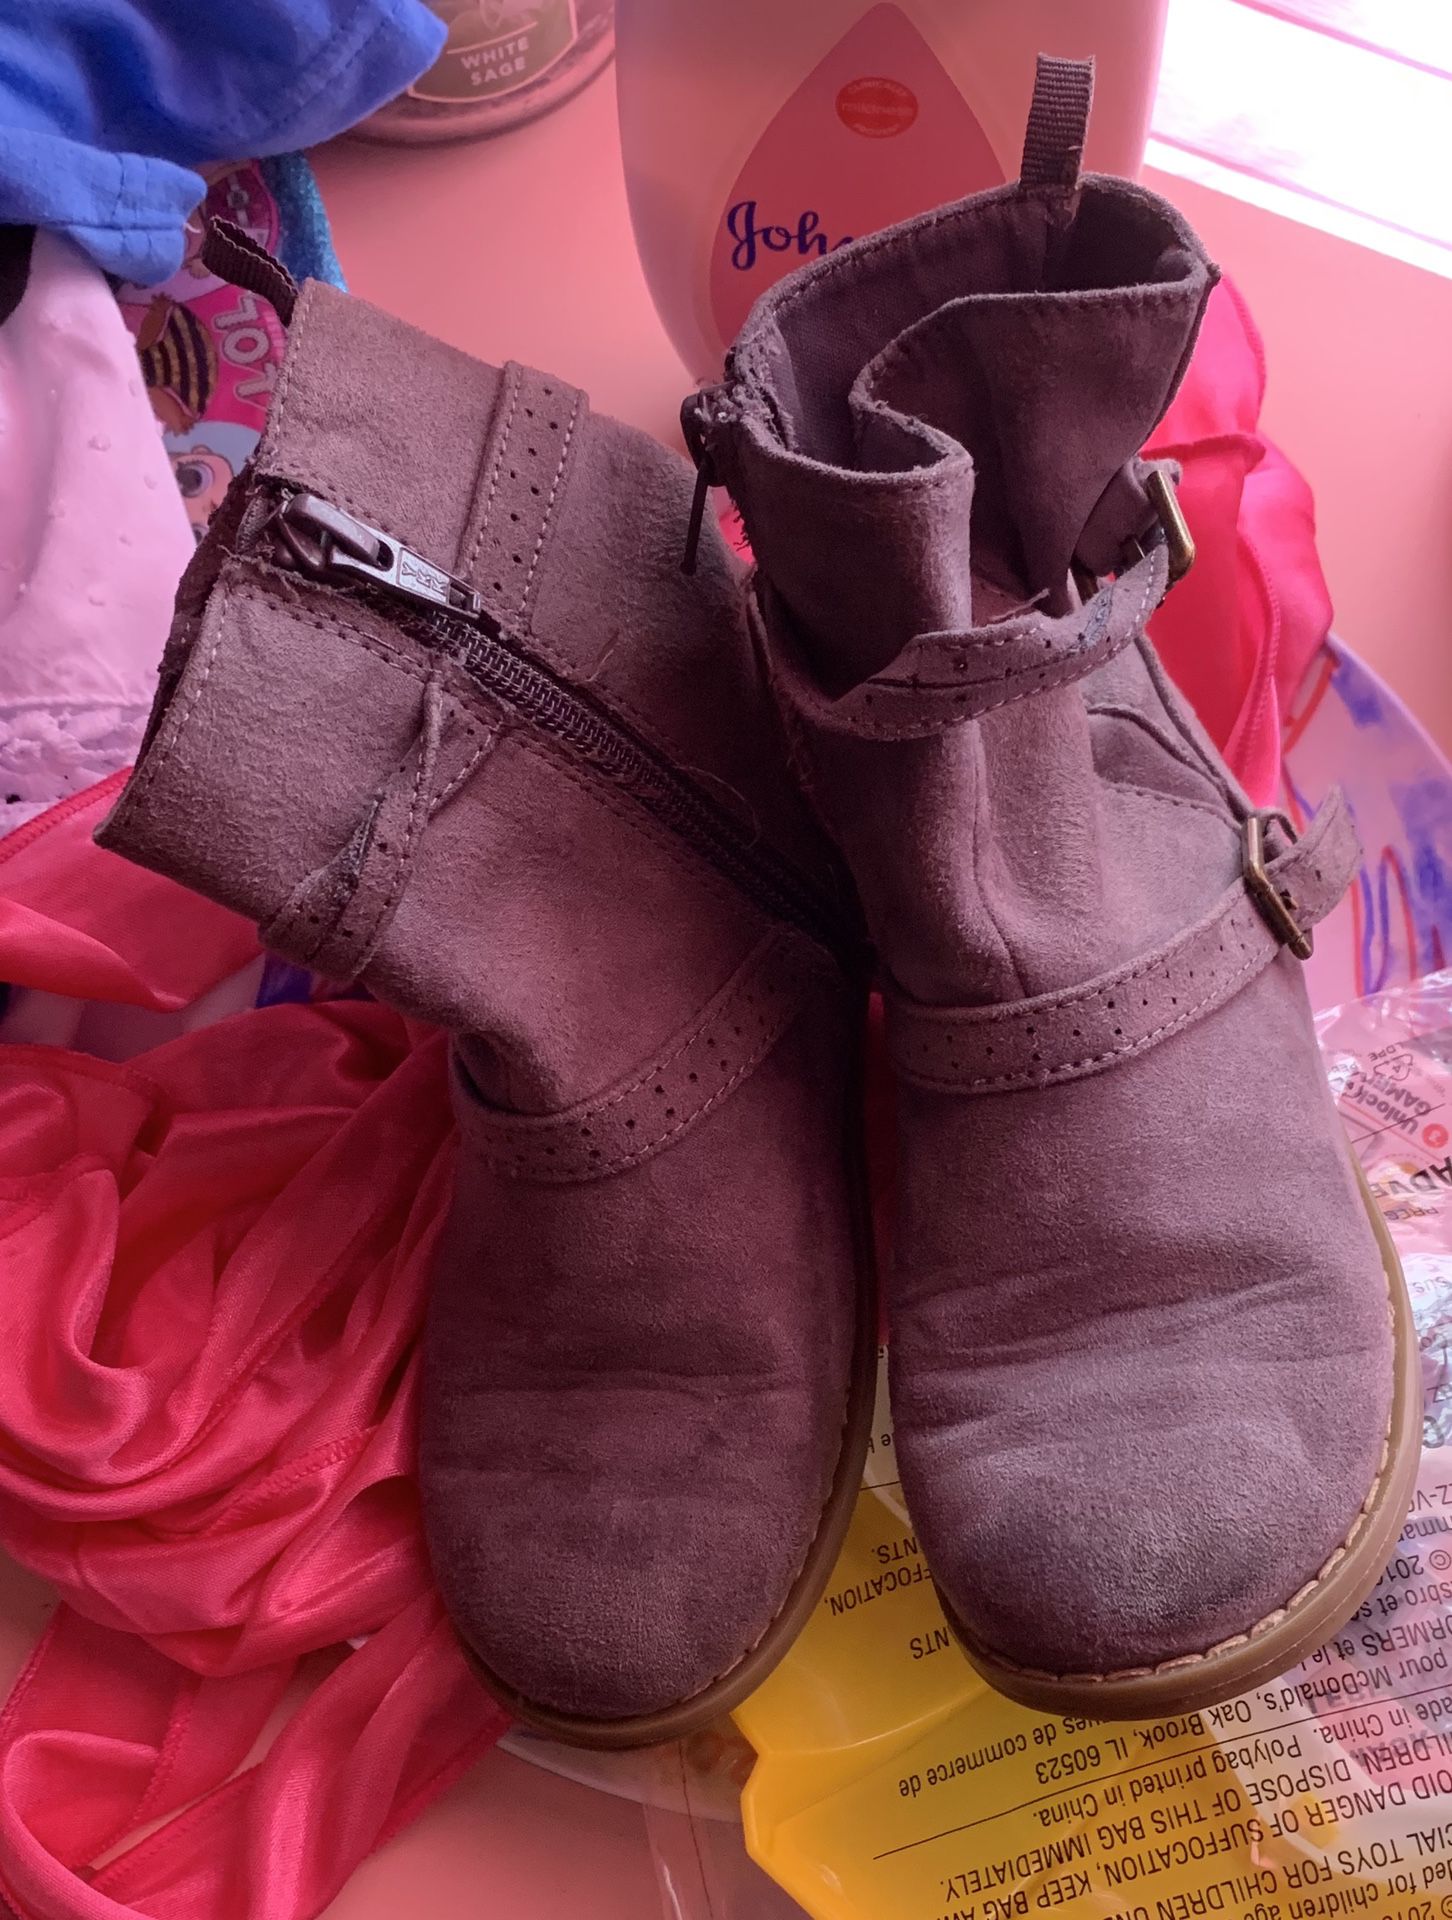 Grey Girls Boots 10c $5